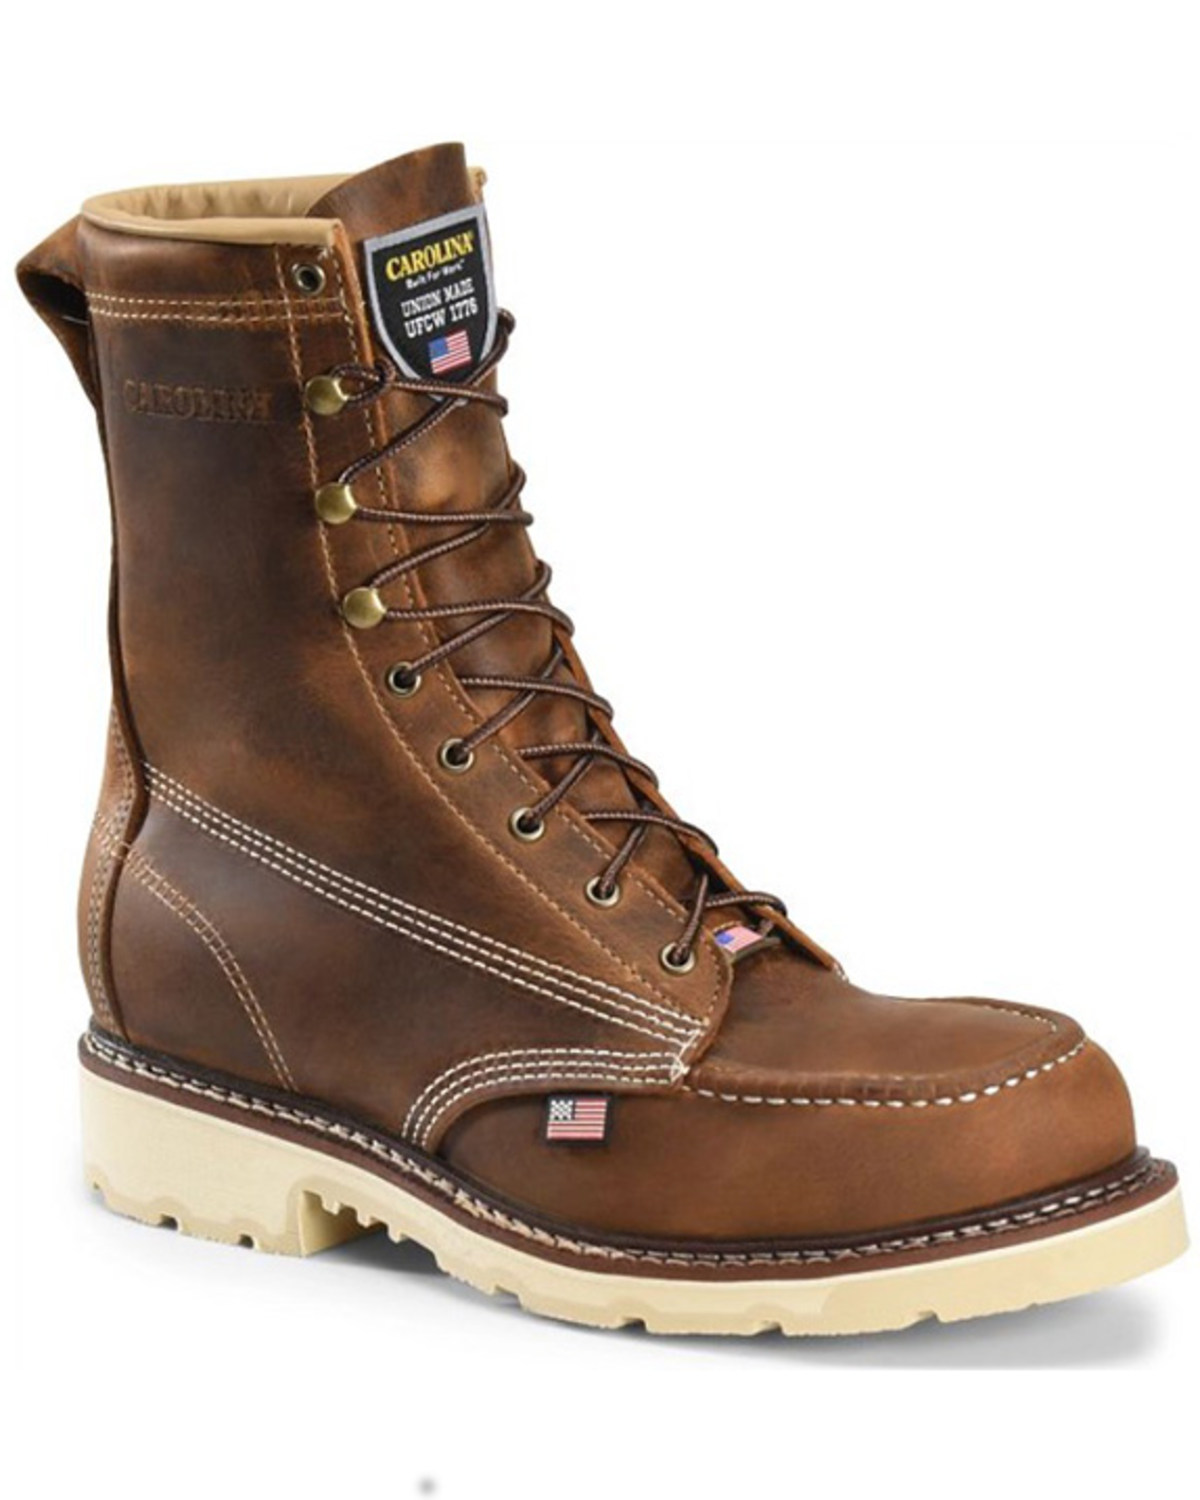 Carolina Men's 8" Work Boots - Steel Toe